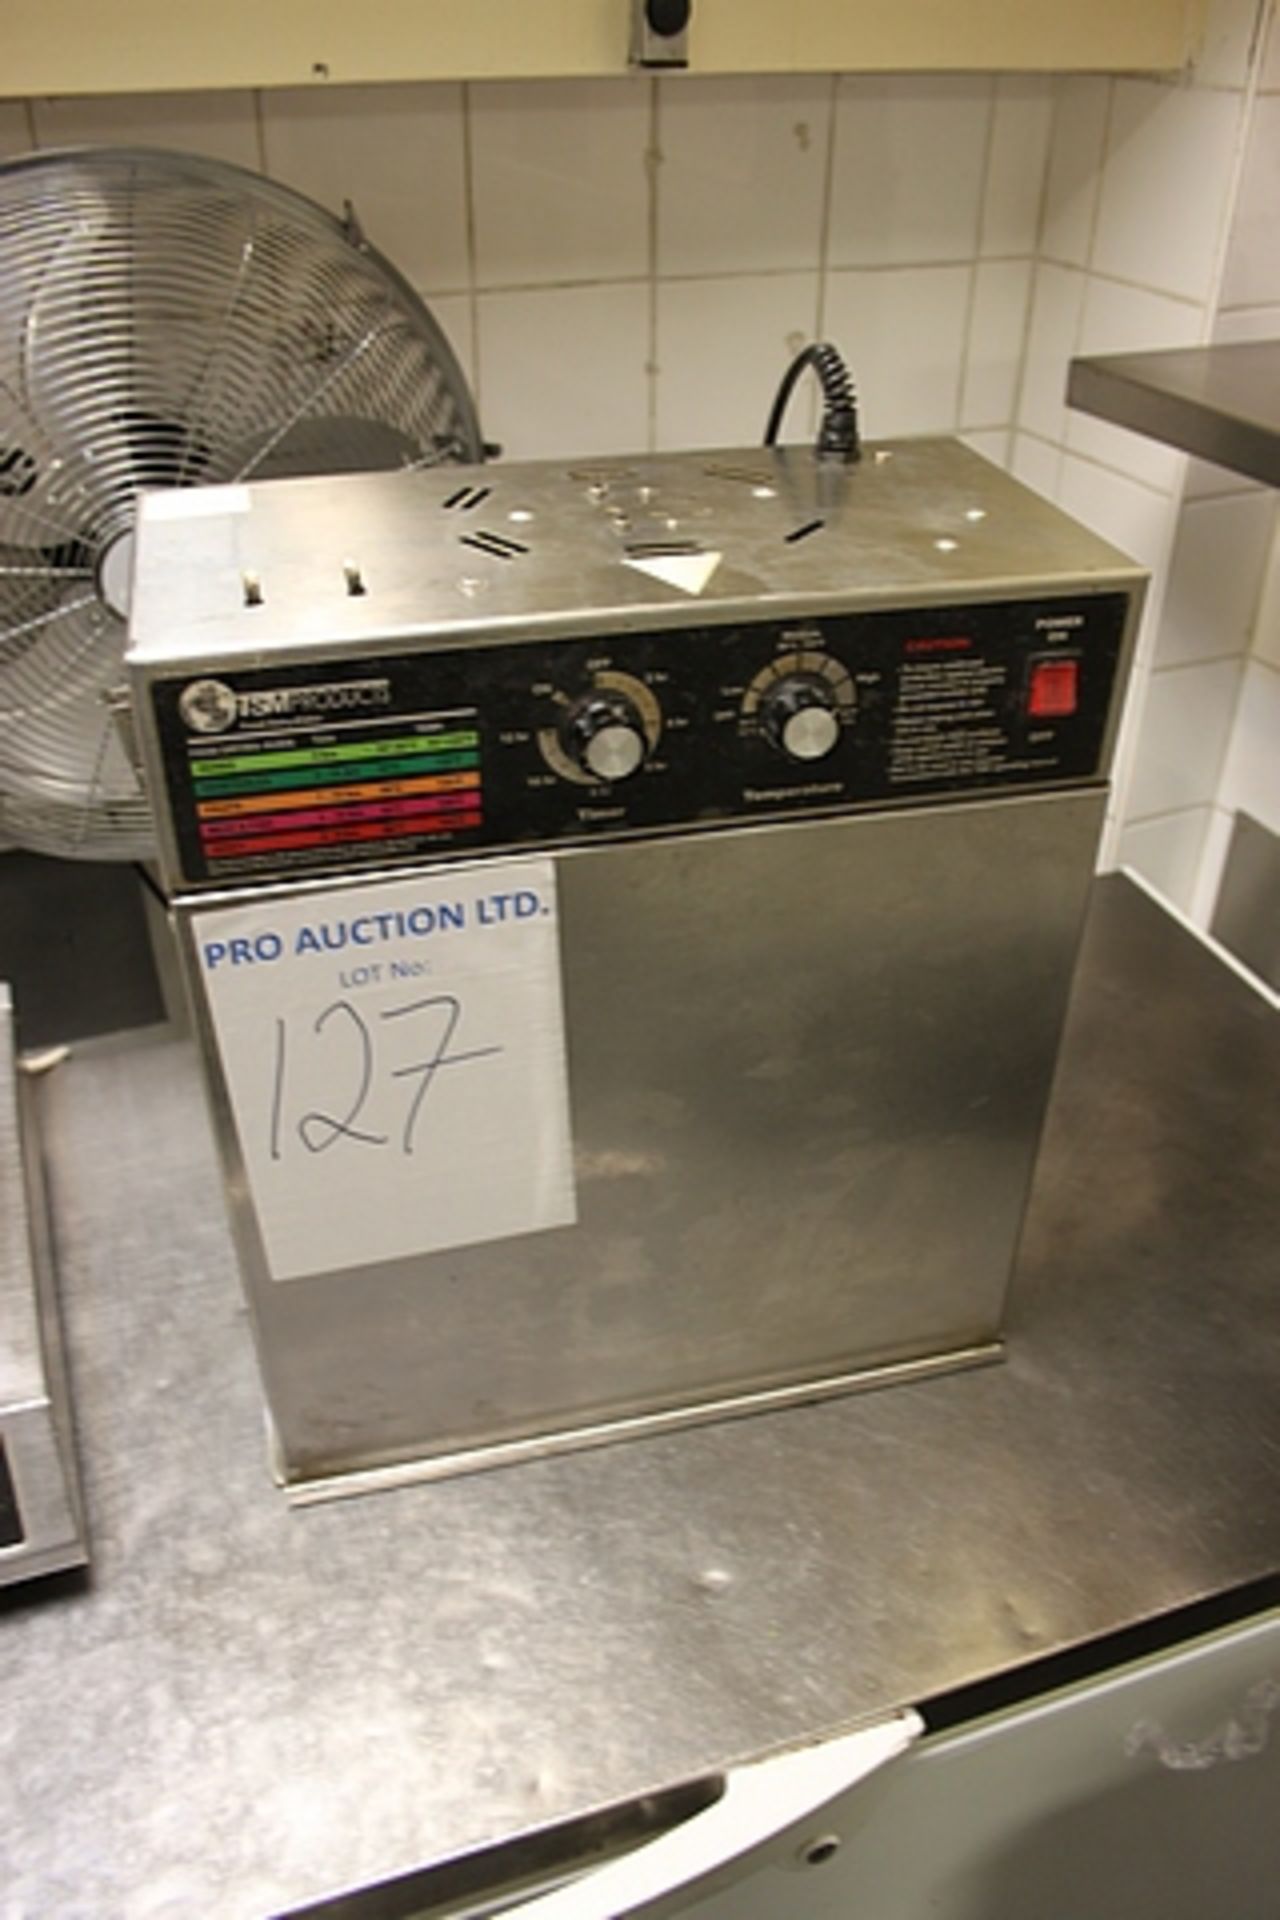 TSM Products Stainless Steel Food Dehydrator with 10 Shelves Dehydrators Small 800 watt heating